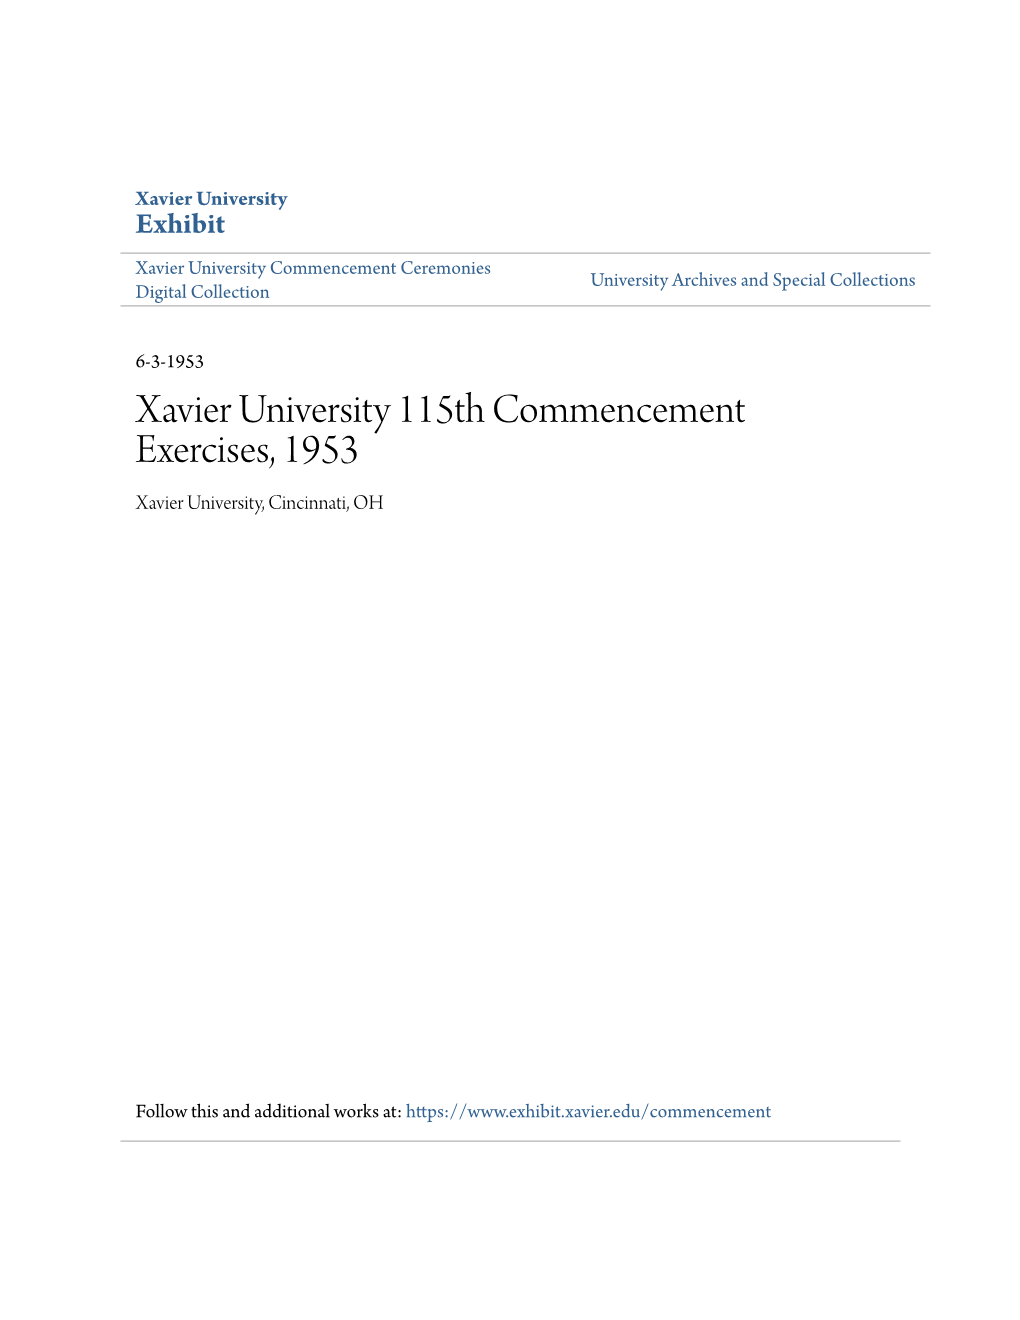 Xavier University 115Th Commencement Exercises, 1953 Xavier University, Cincinnati, OH